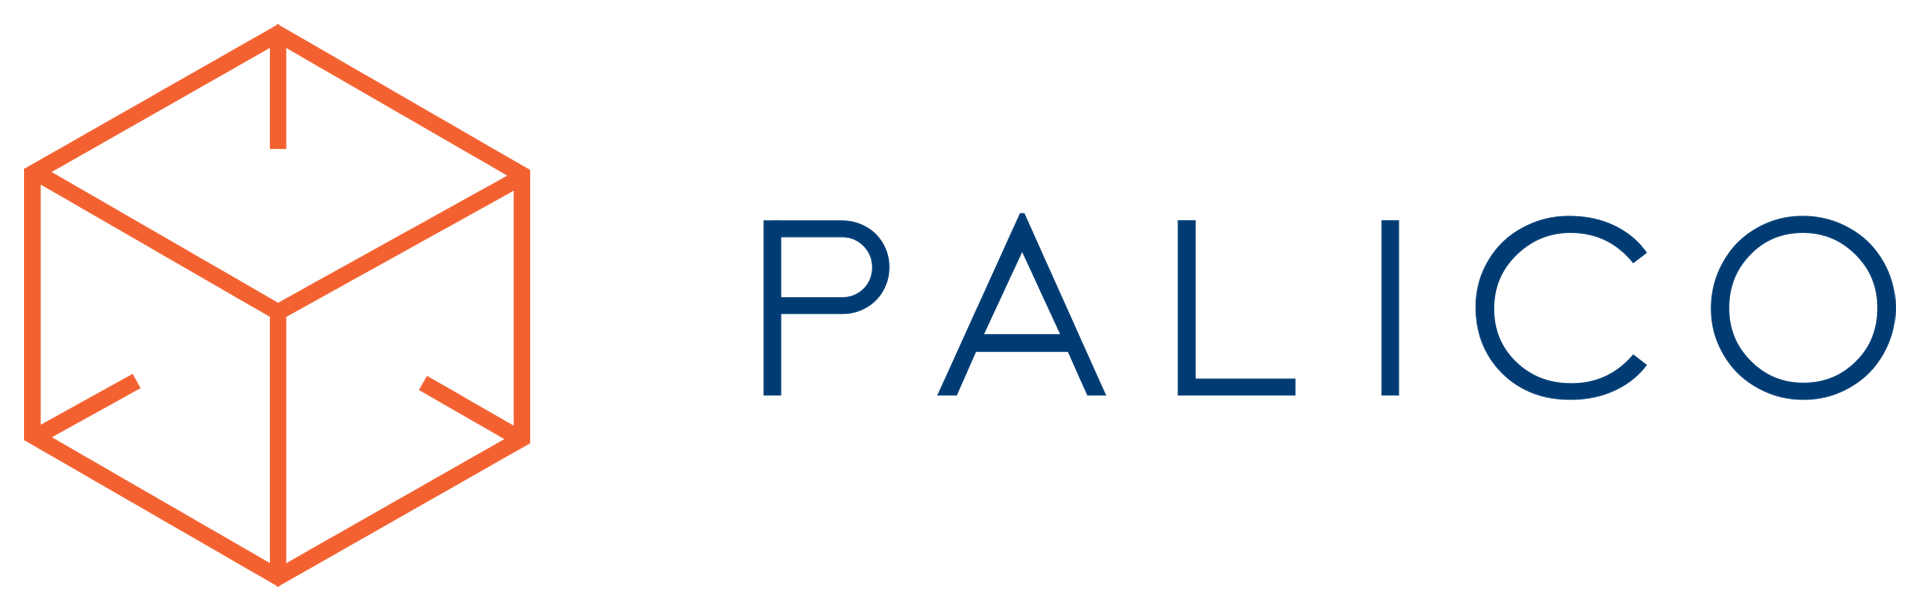 Palico_Logo_Transparent_Background_1920x611 (1)